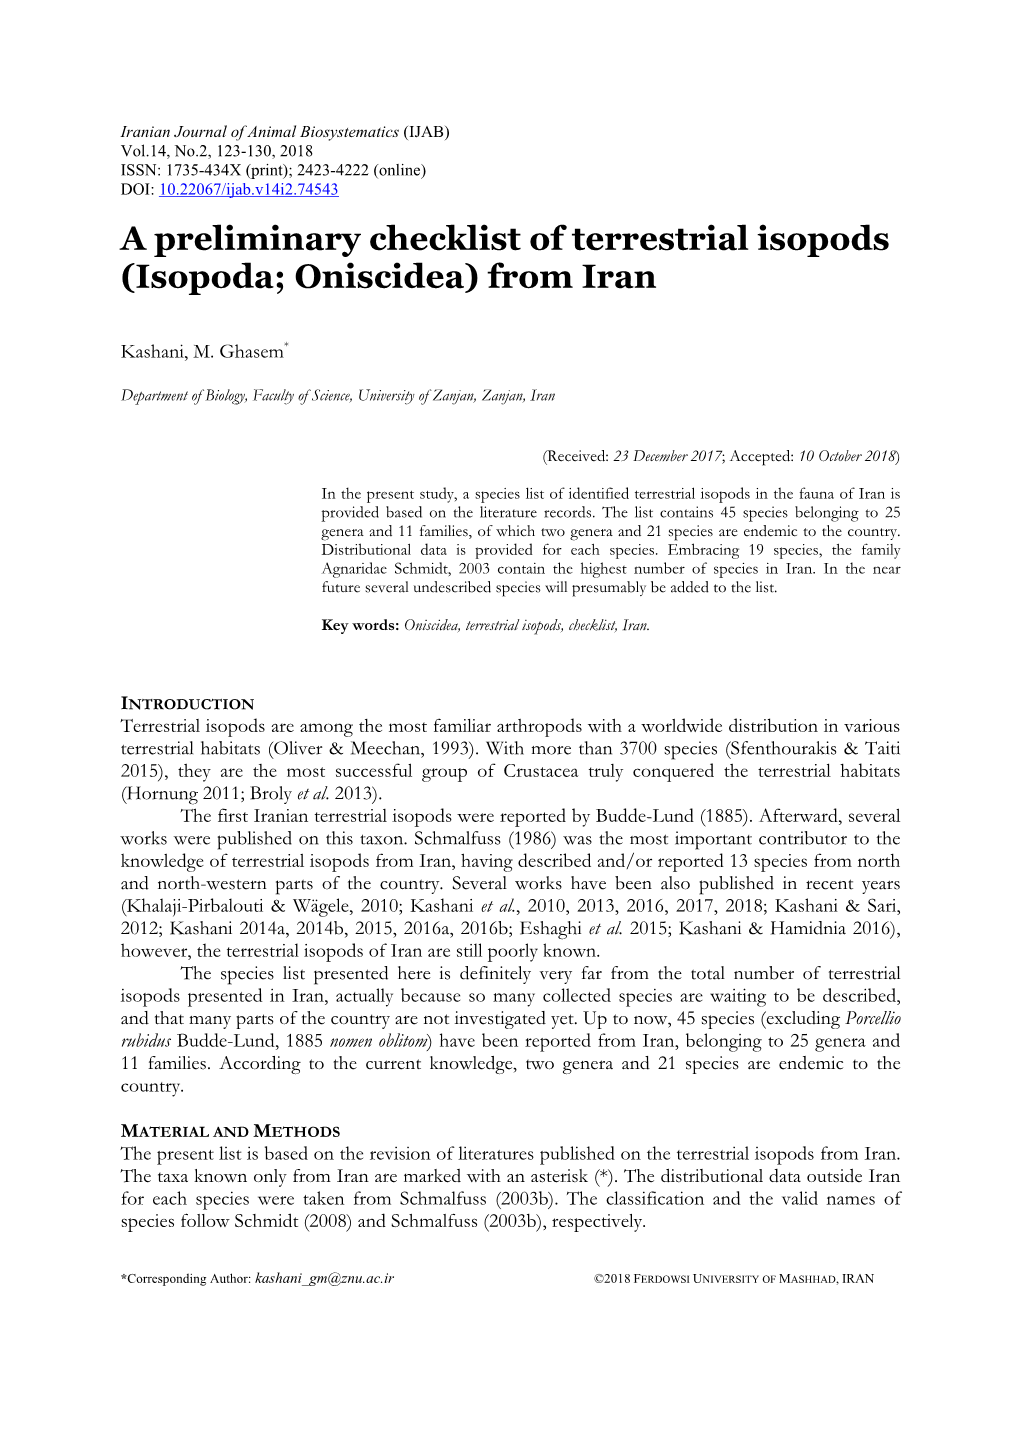 A Preliminary Checklist of Terrestrial Isopods (Isopoda; Oniscidea) from Iran